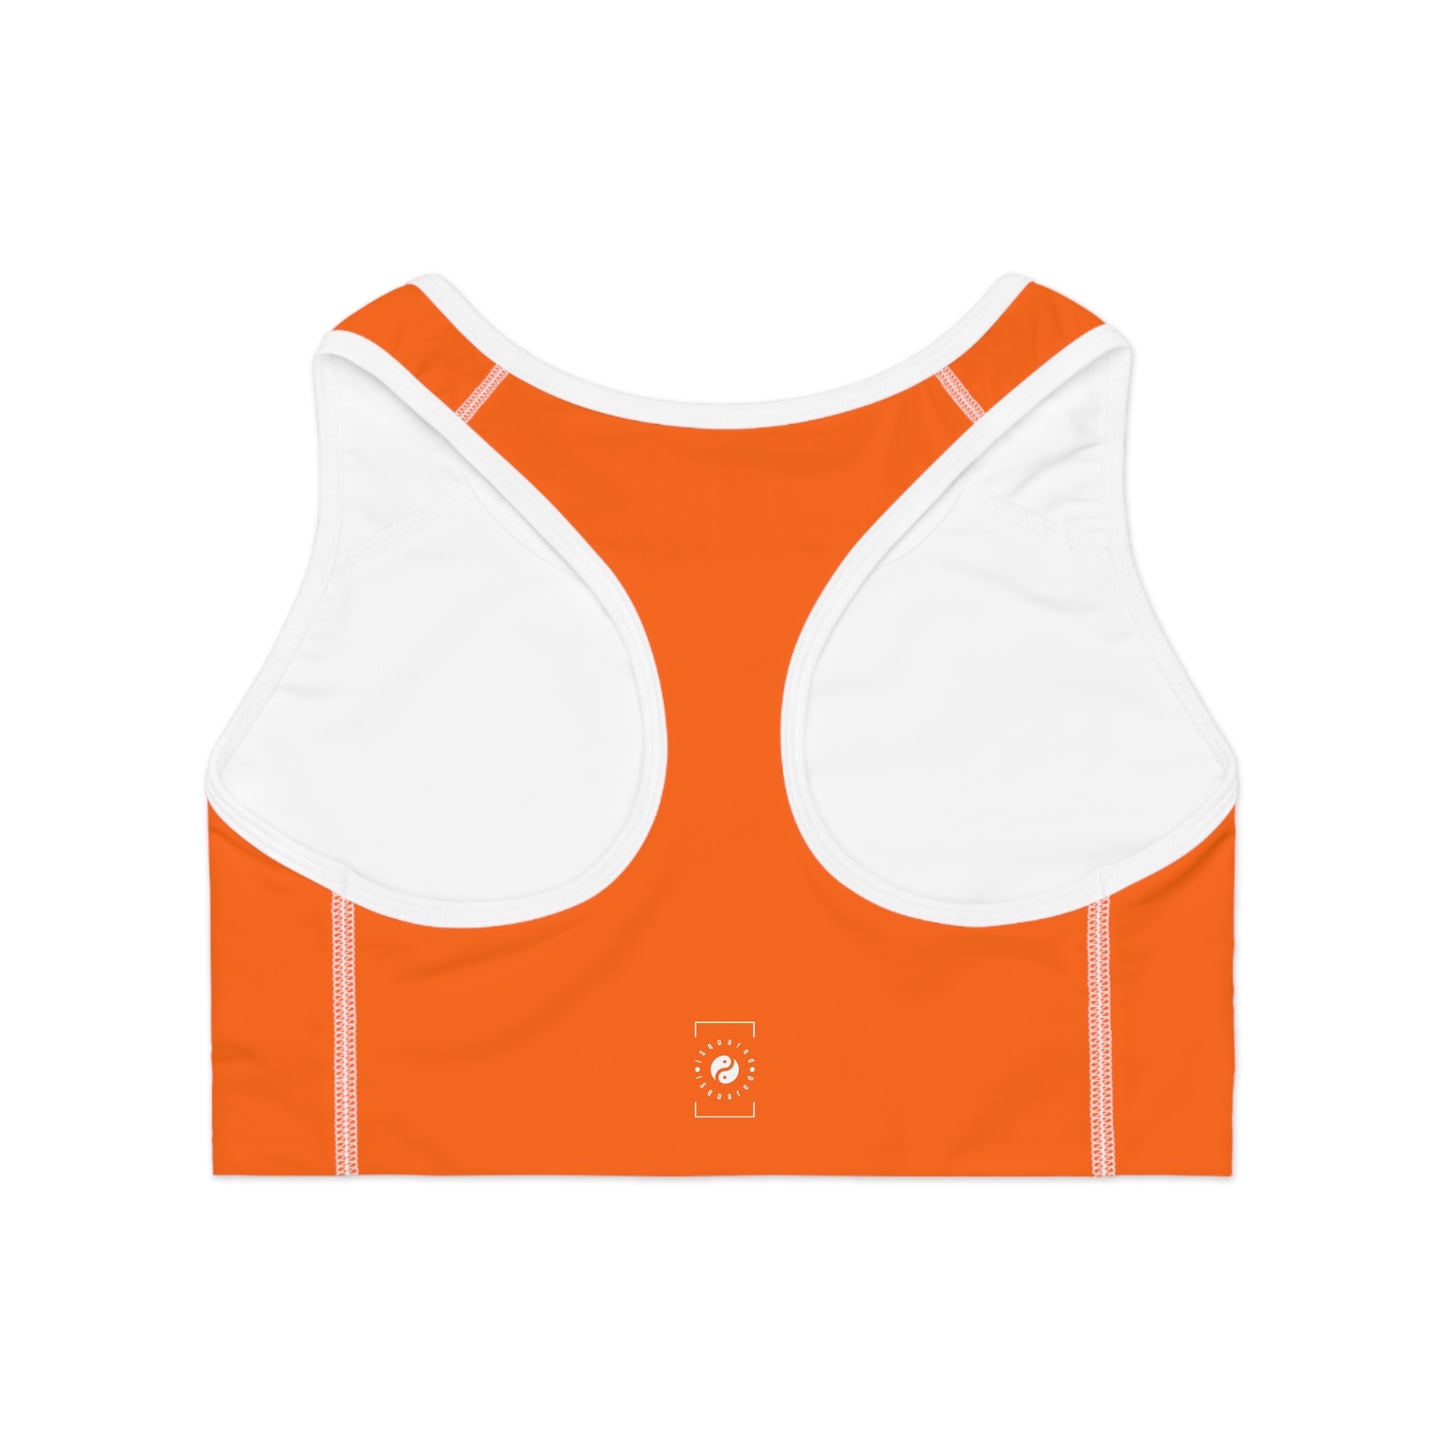 Neon Orange #FF6700 - High Performance Sports Bra